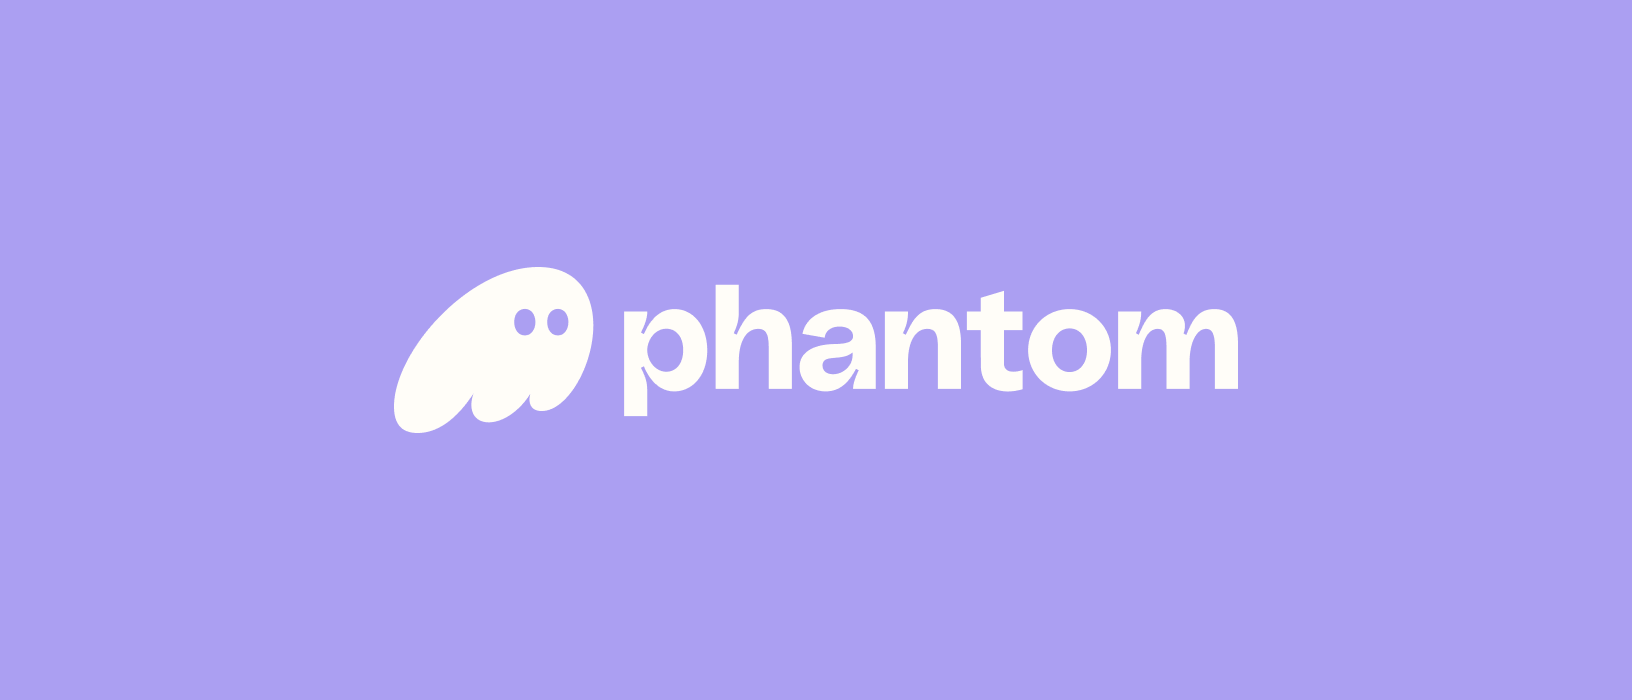 Danny Phantom logo (2004-2007) (2014 Present) by seanscreations1 on  DeviantArt